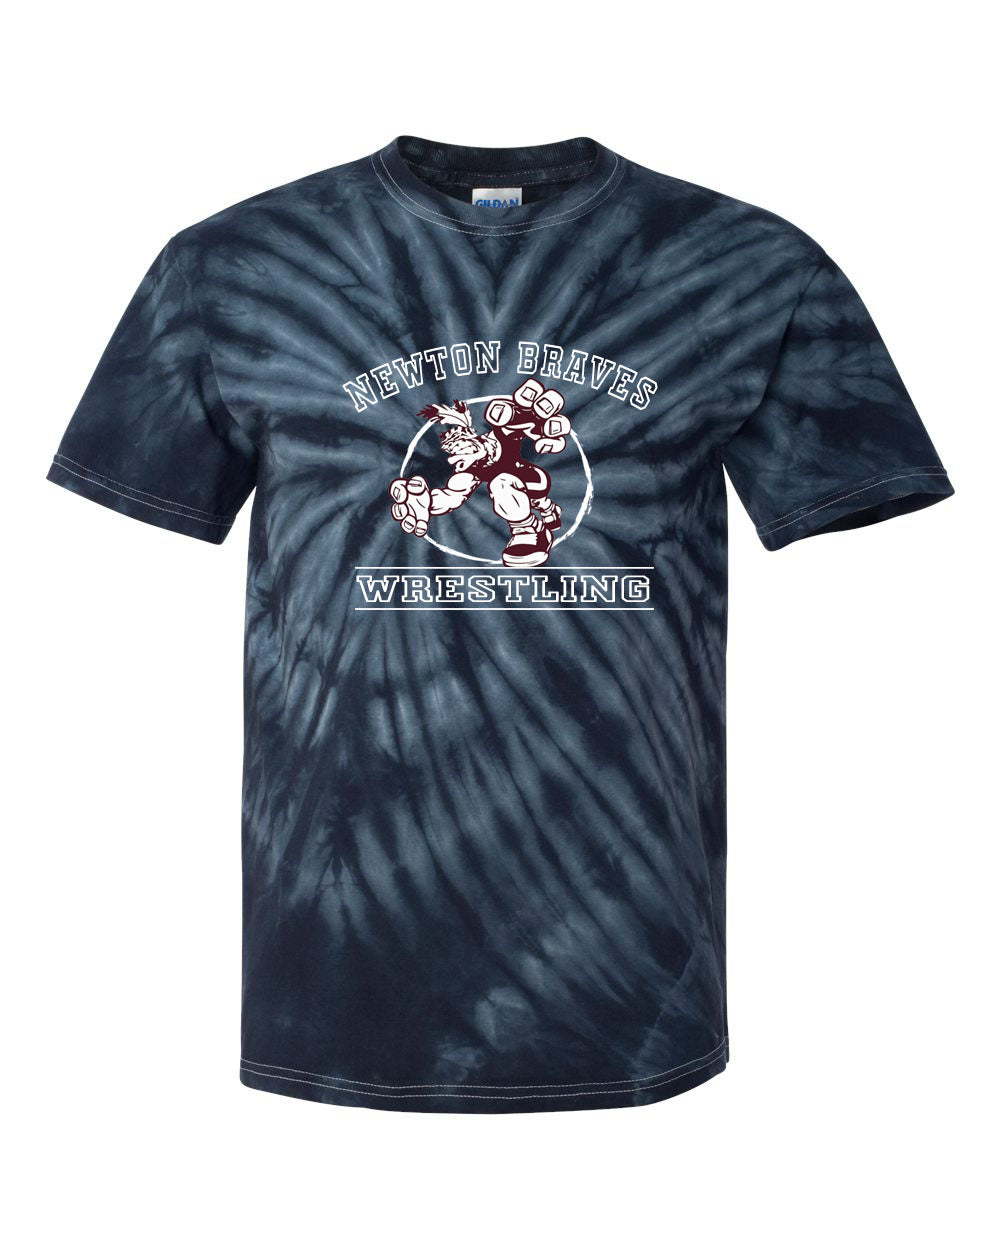 Newton Wrestling Tie Dye t-shirt Design 8